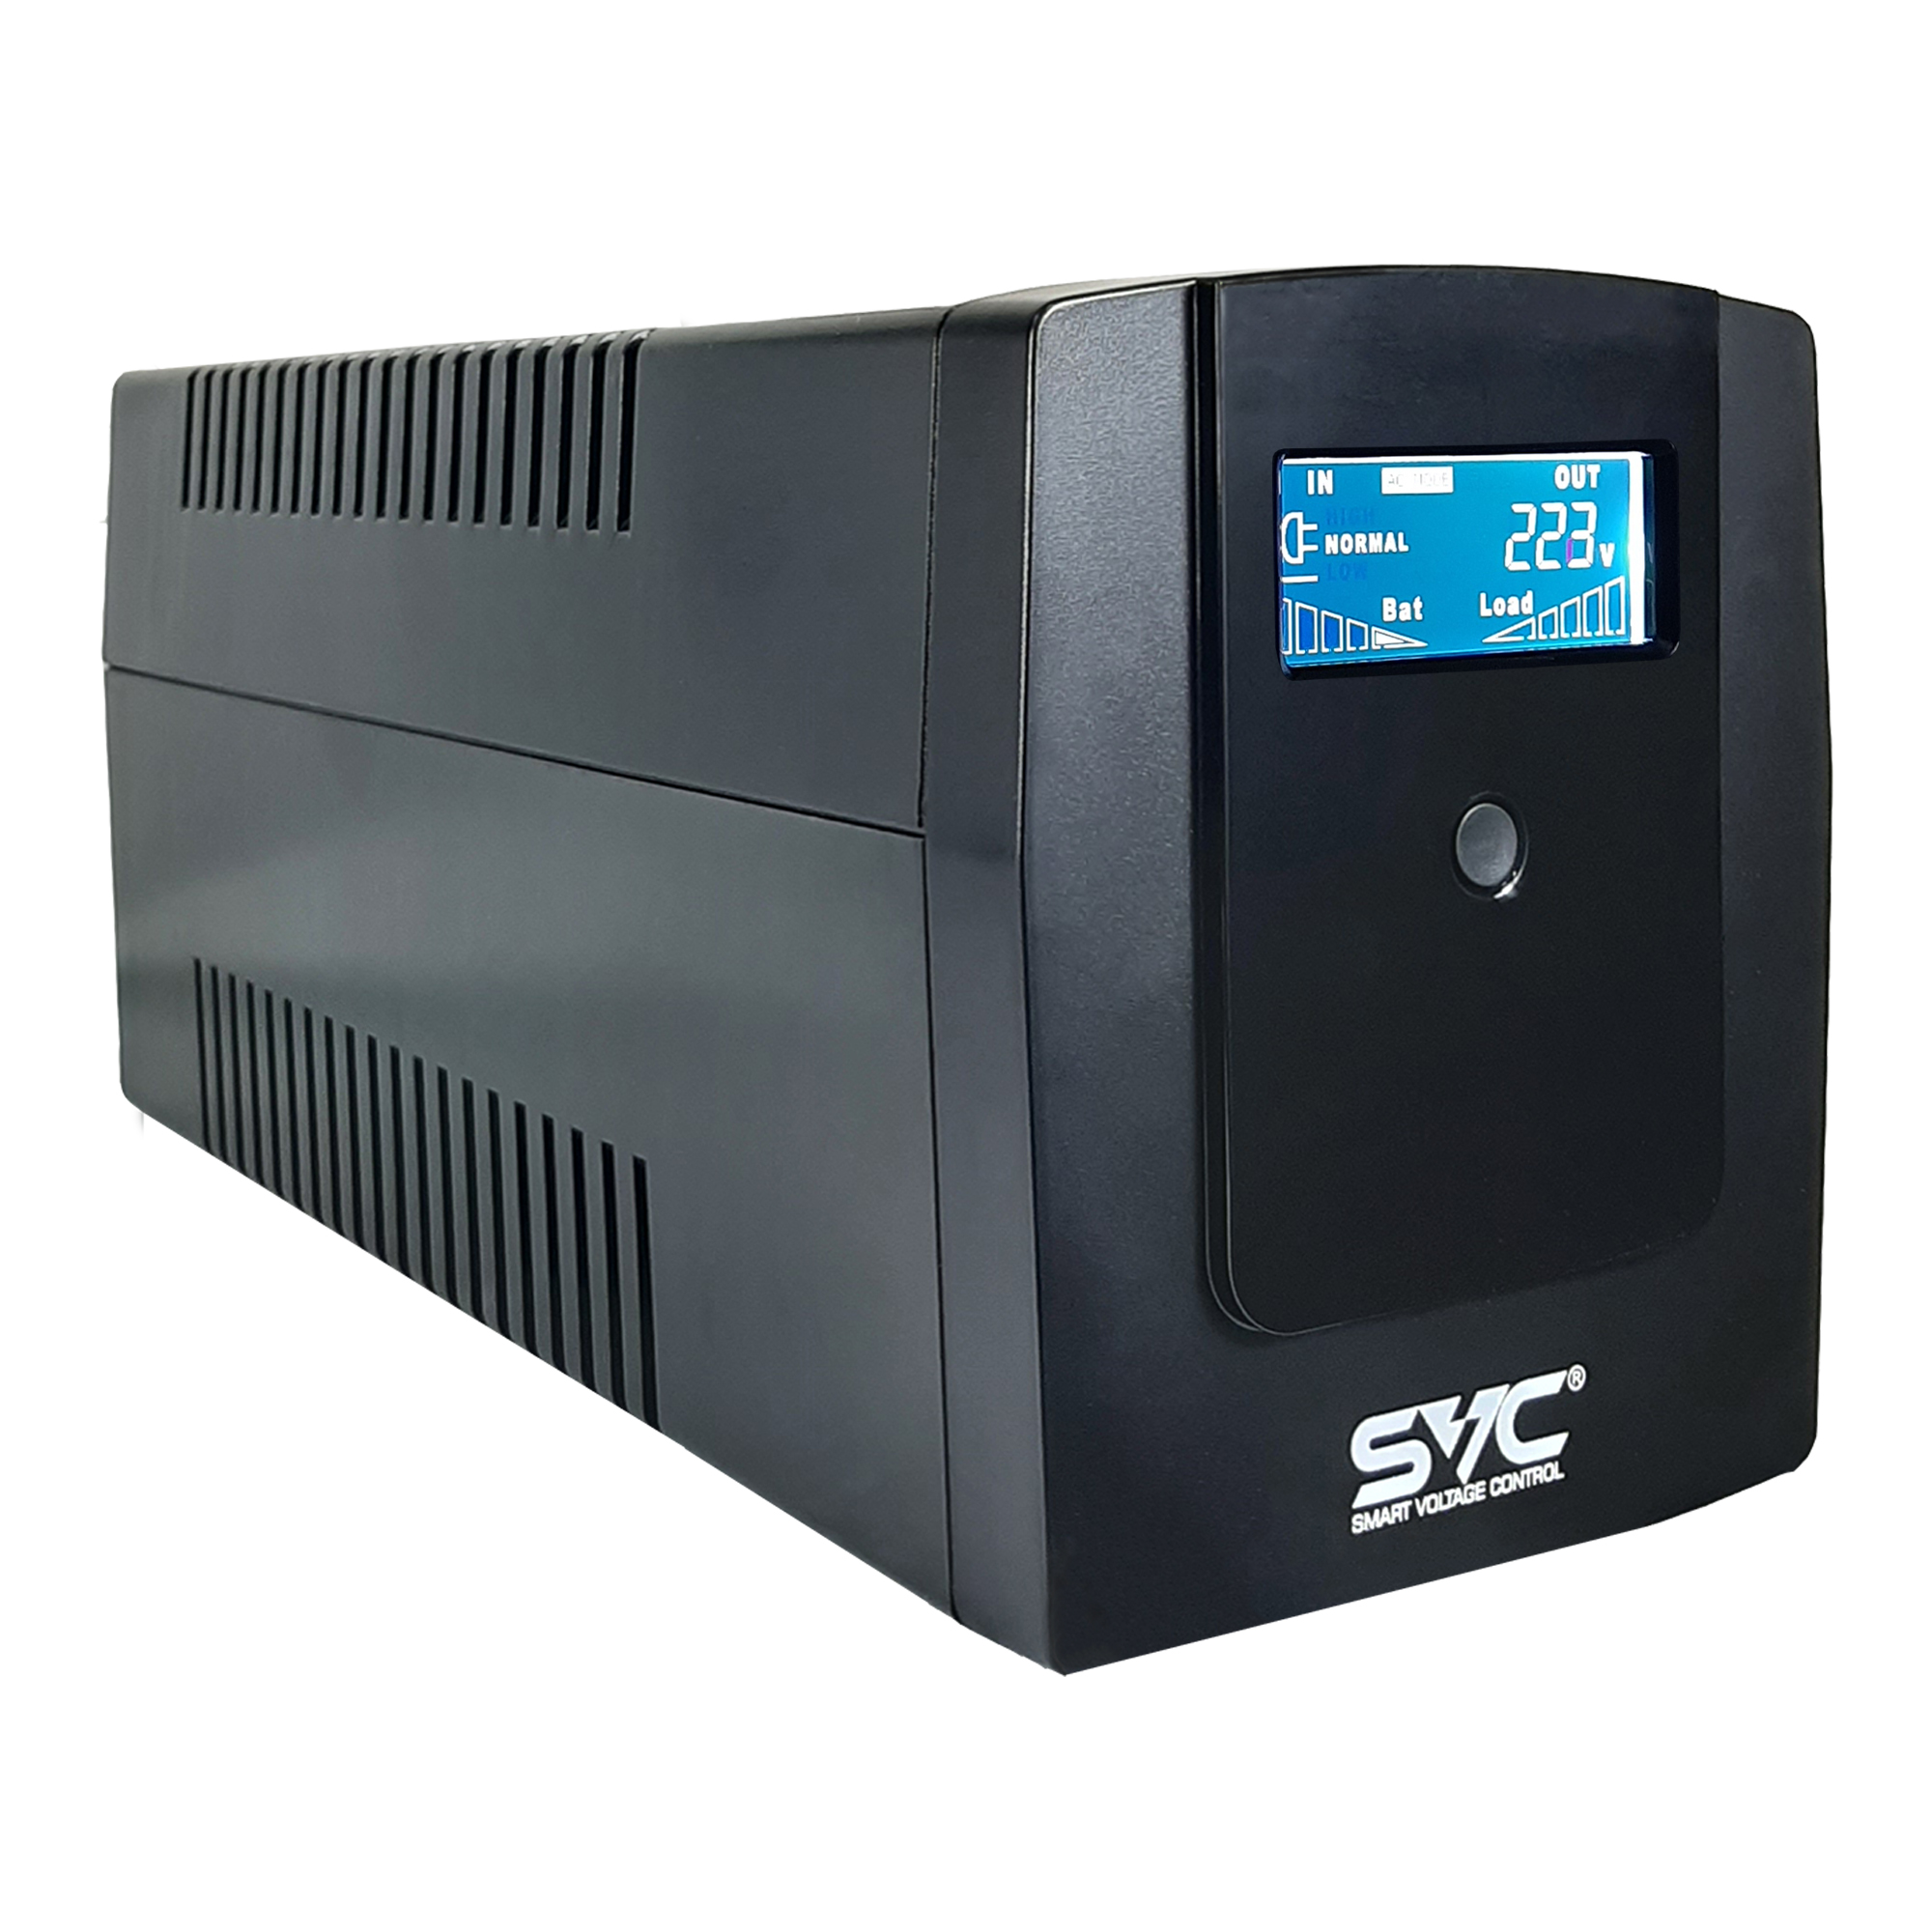 ИБП SVC V-1200-R-LCD, 1200VA, 720W, EURO, розеток - 3, USB, черный (V-1200-R-LCD)